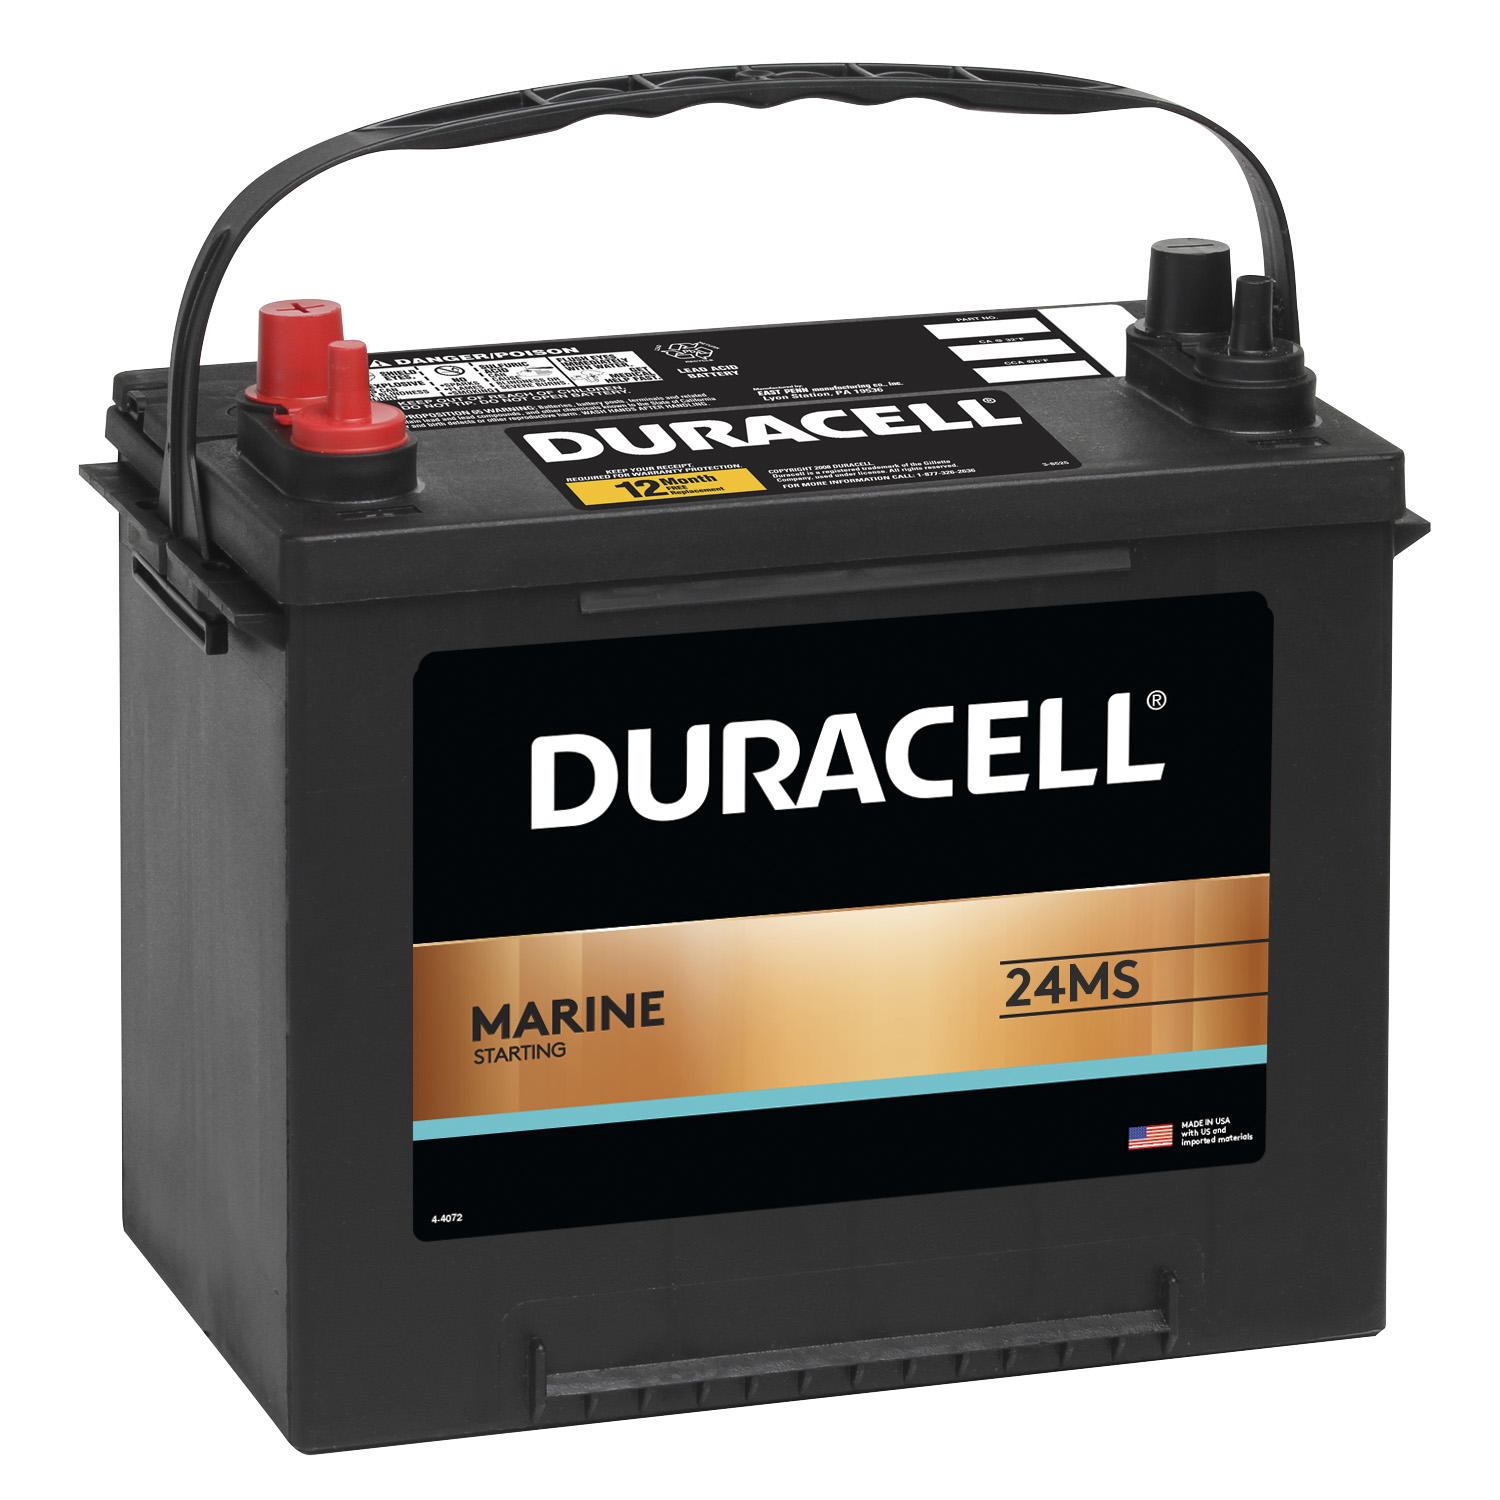 Starting battery. Everstart lead acid Marine starting Battery, Group Size 24ms - 1000 MCA (12 Volt/1000 MCA). Starter Battery. Duracell car Starter Battery.